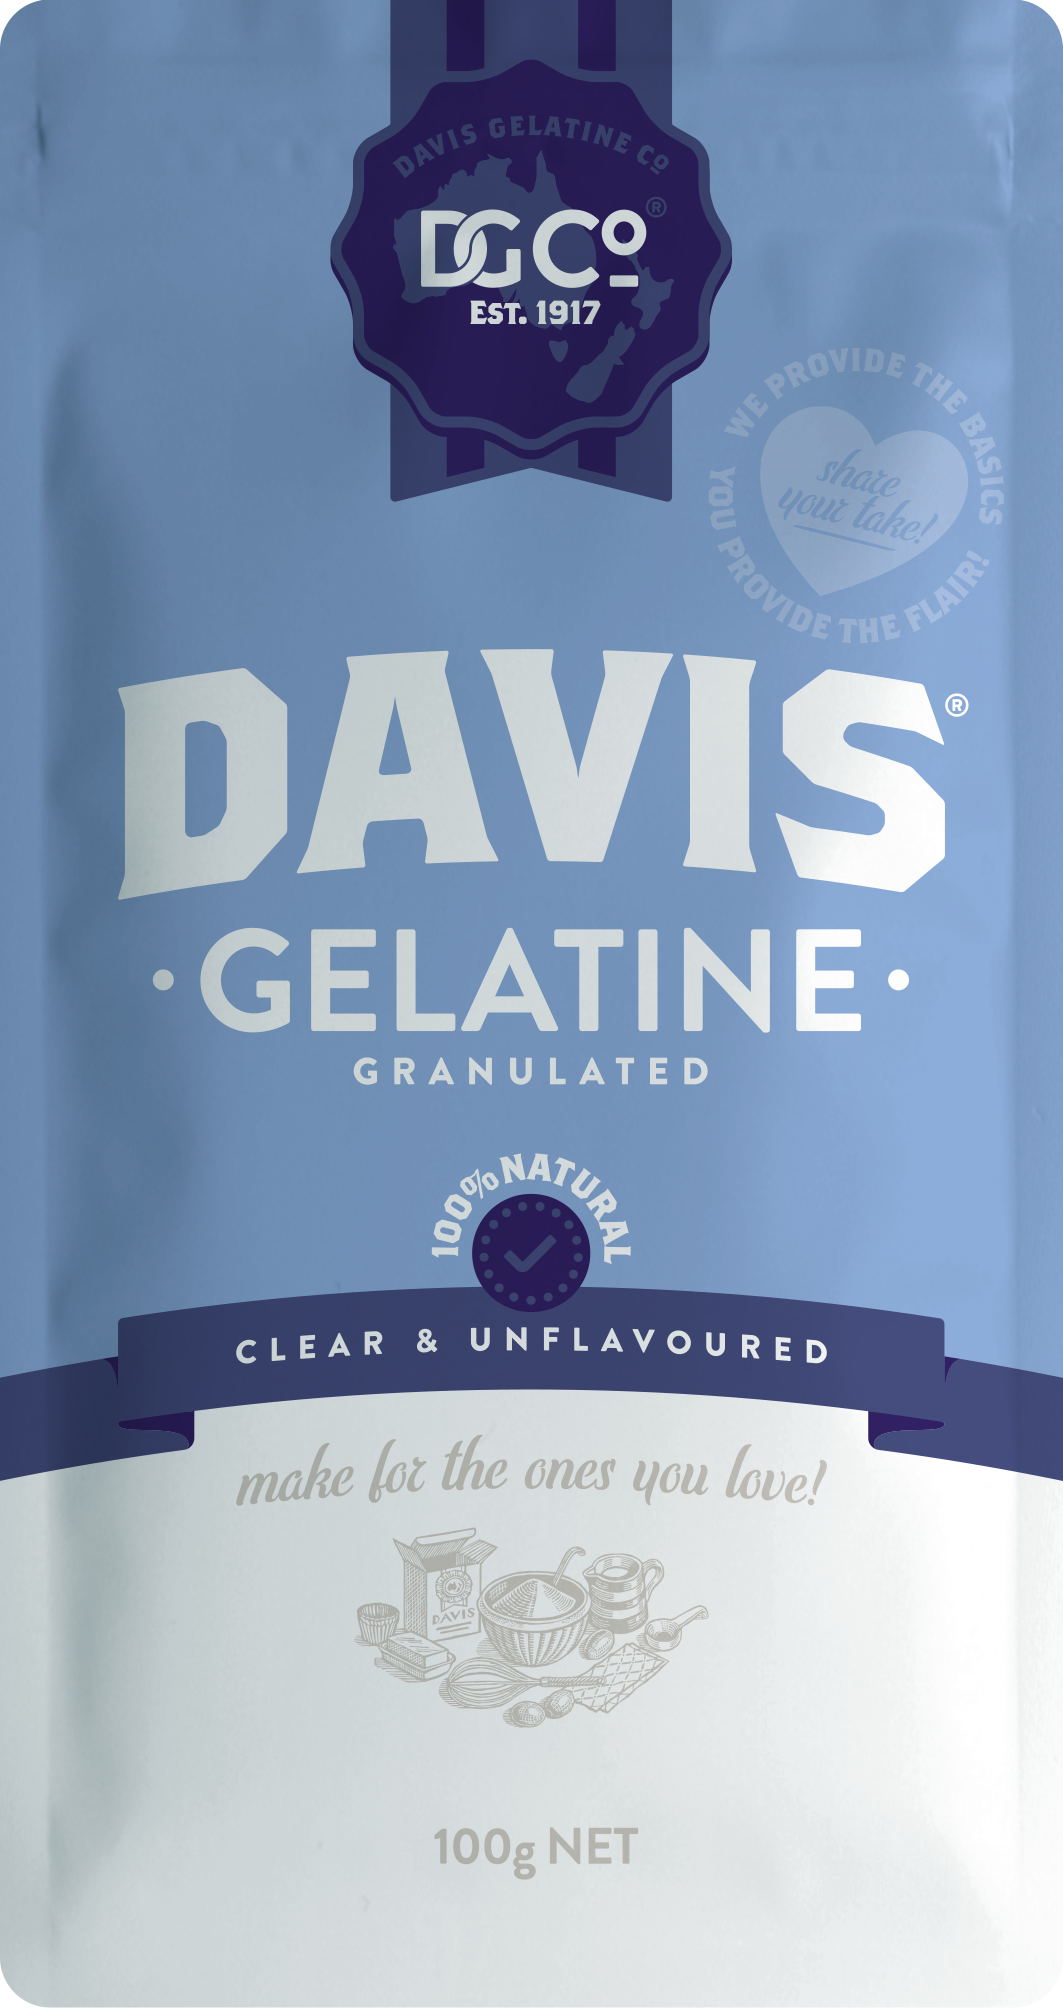 1. Davis Gelatine (Granuated) 100g NET